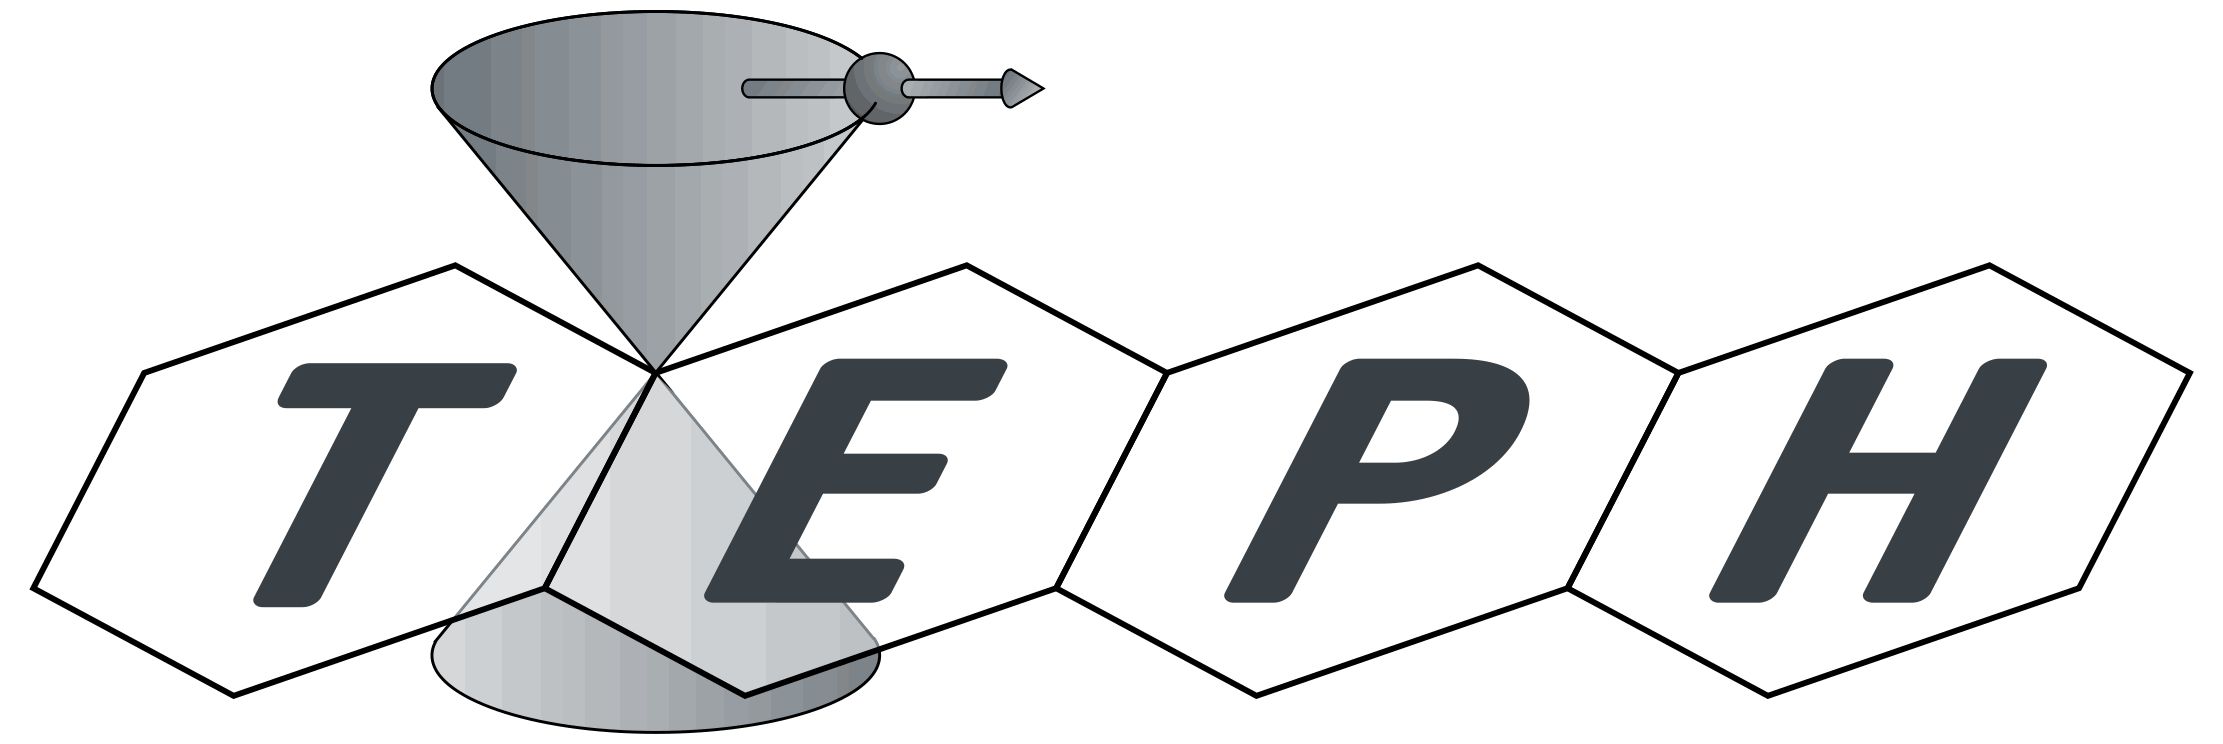 Logo der Professur Technische Physik: Dirac-Kegel und Schriftzug TEPH